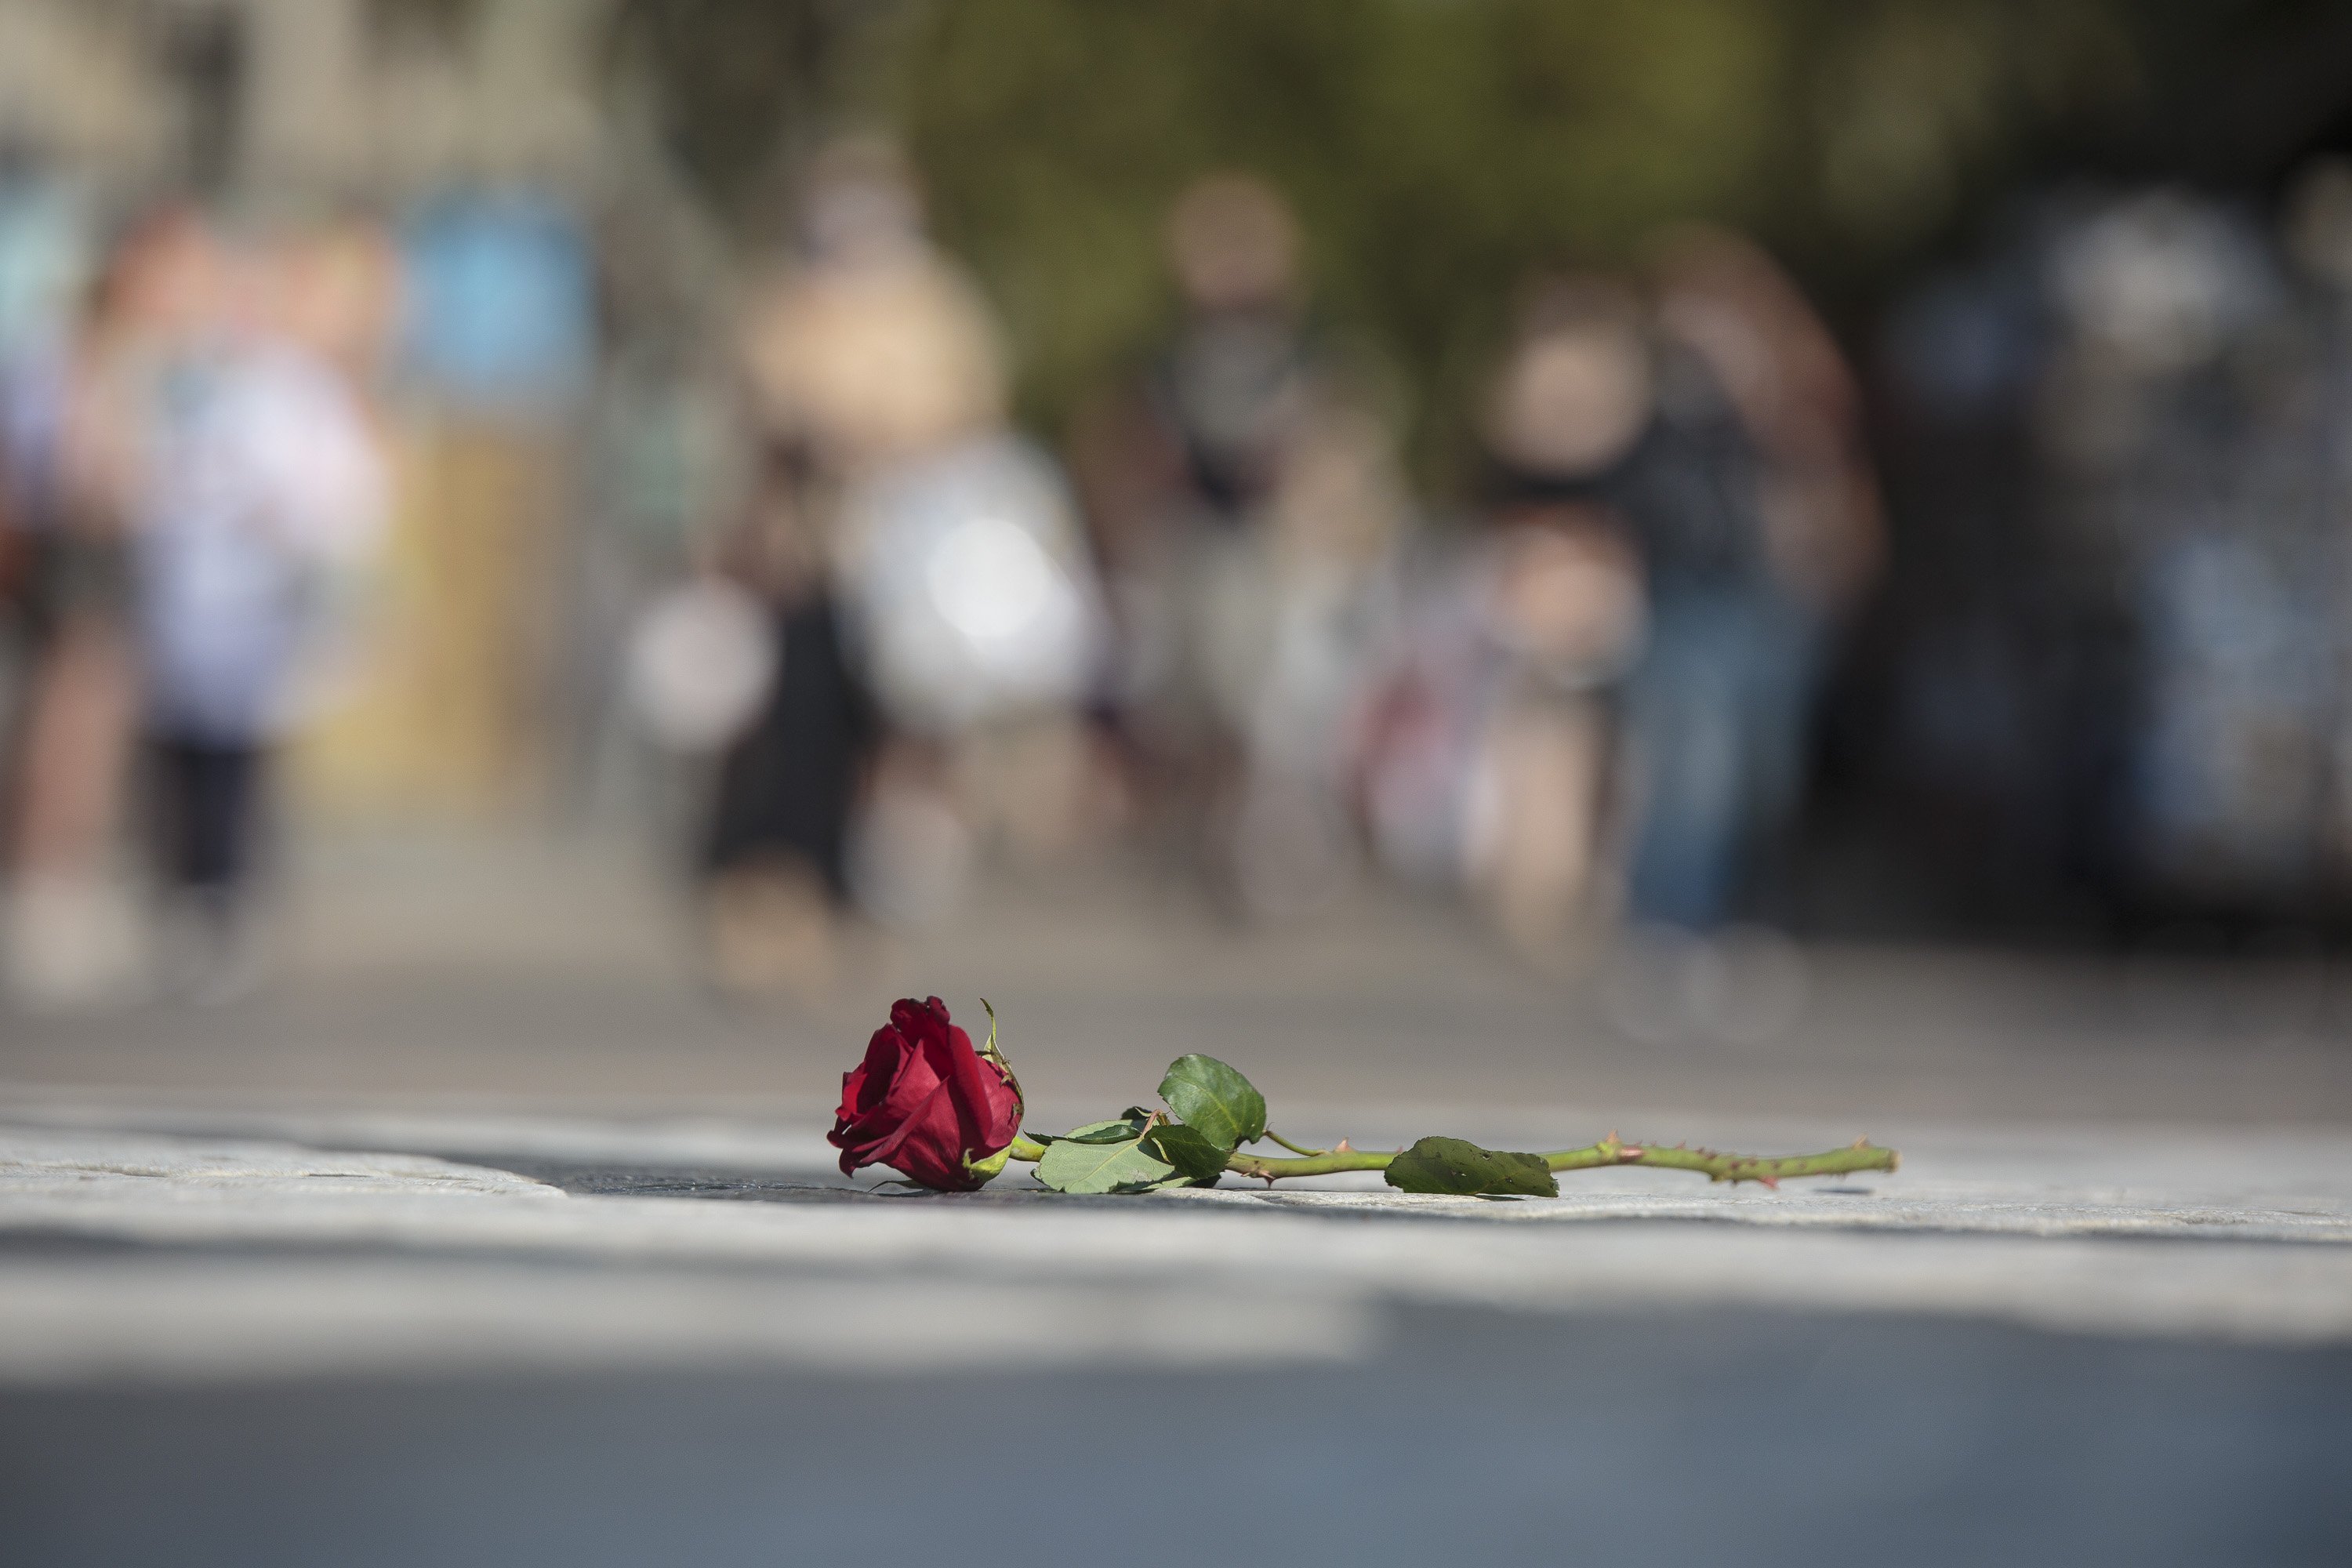 Rosa Homenatge atentado 17-A La Rambla ofrenda floral - Sergi Alcazar